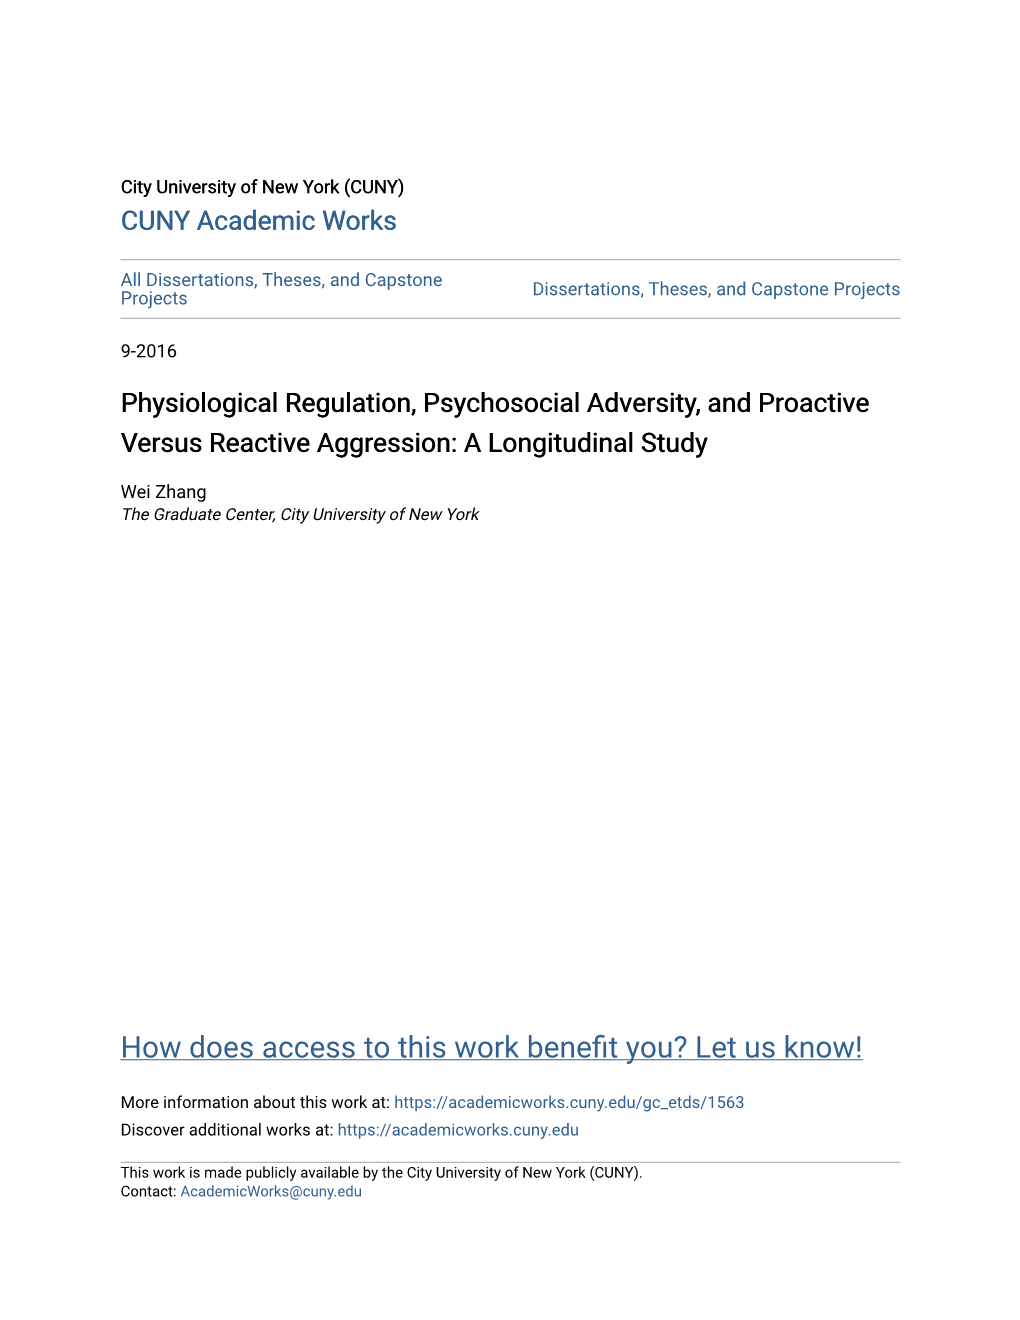 Physiological Regulation, Psychosocial Adversity, and Proactive Versus Reactive Aggression: a Longitudinal Study